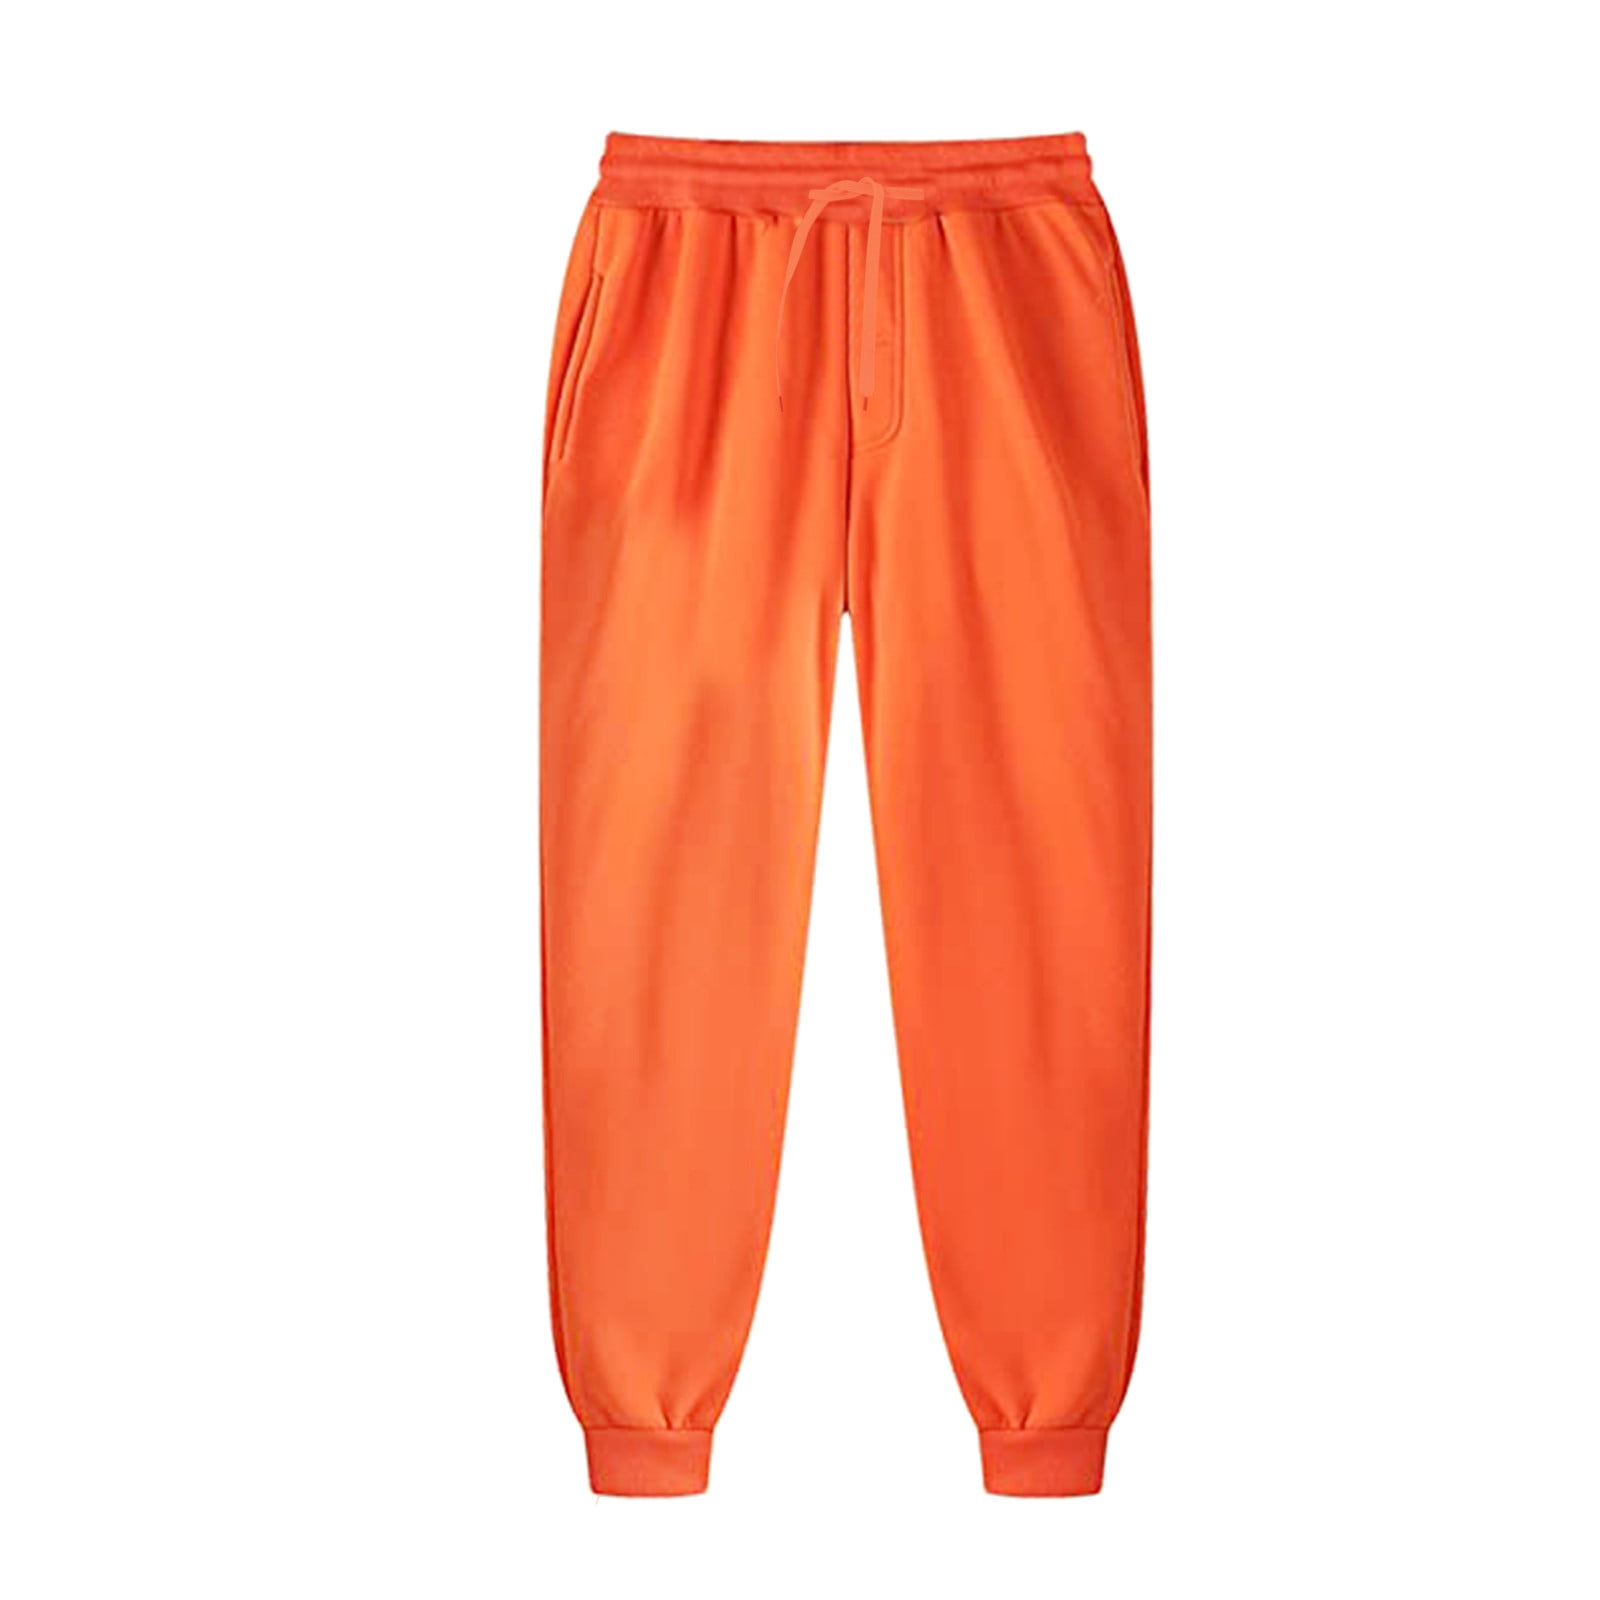 kpoplk Sweatpants for Men Loose Fit,Men's Baggy Hop Harem Pants with  Drawstring, Paisley Printed Jogger Pants Fashion Streetwear(Beige,S) 